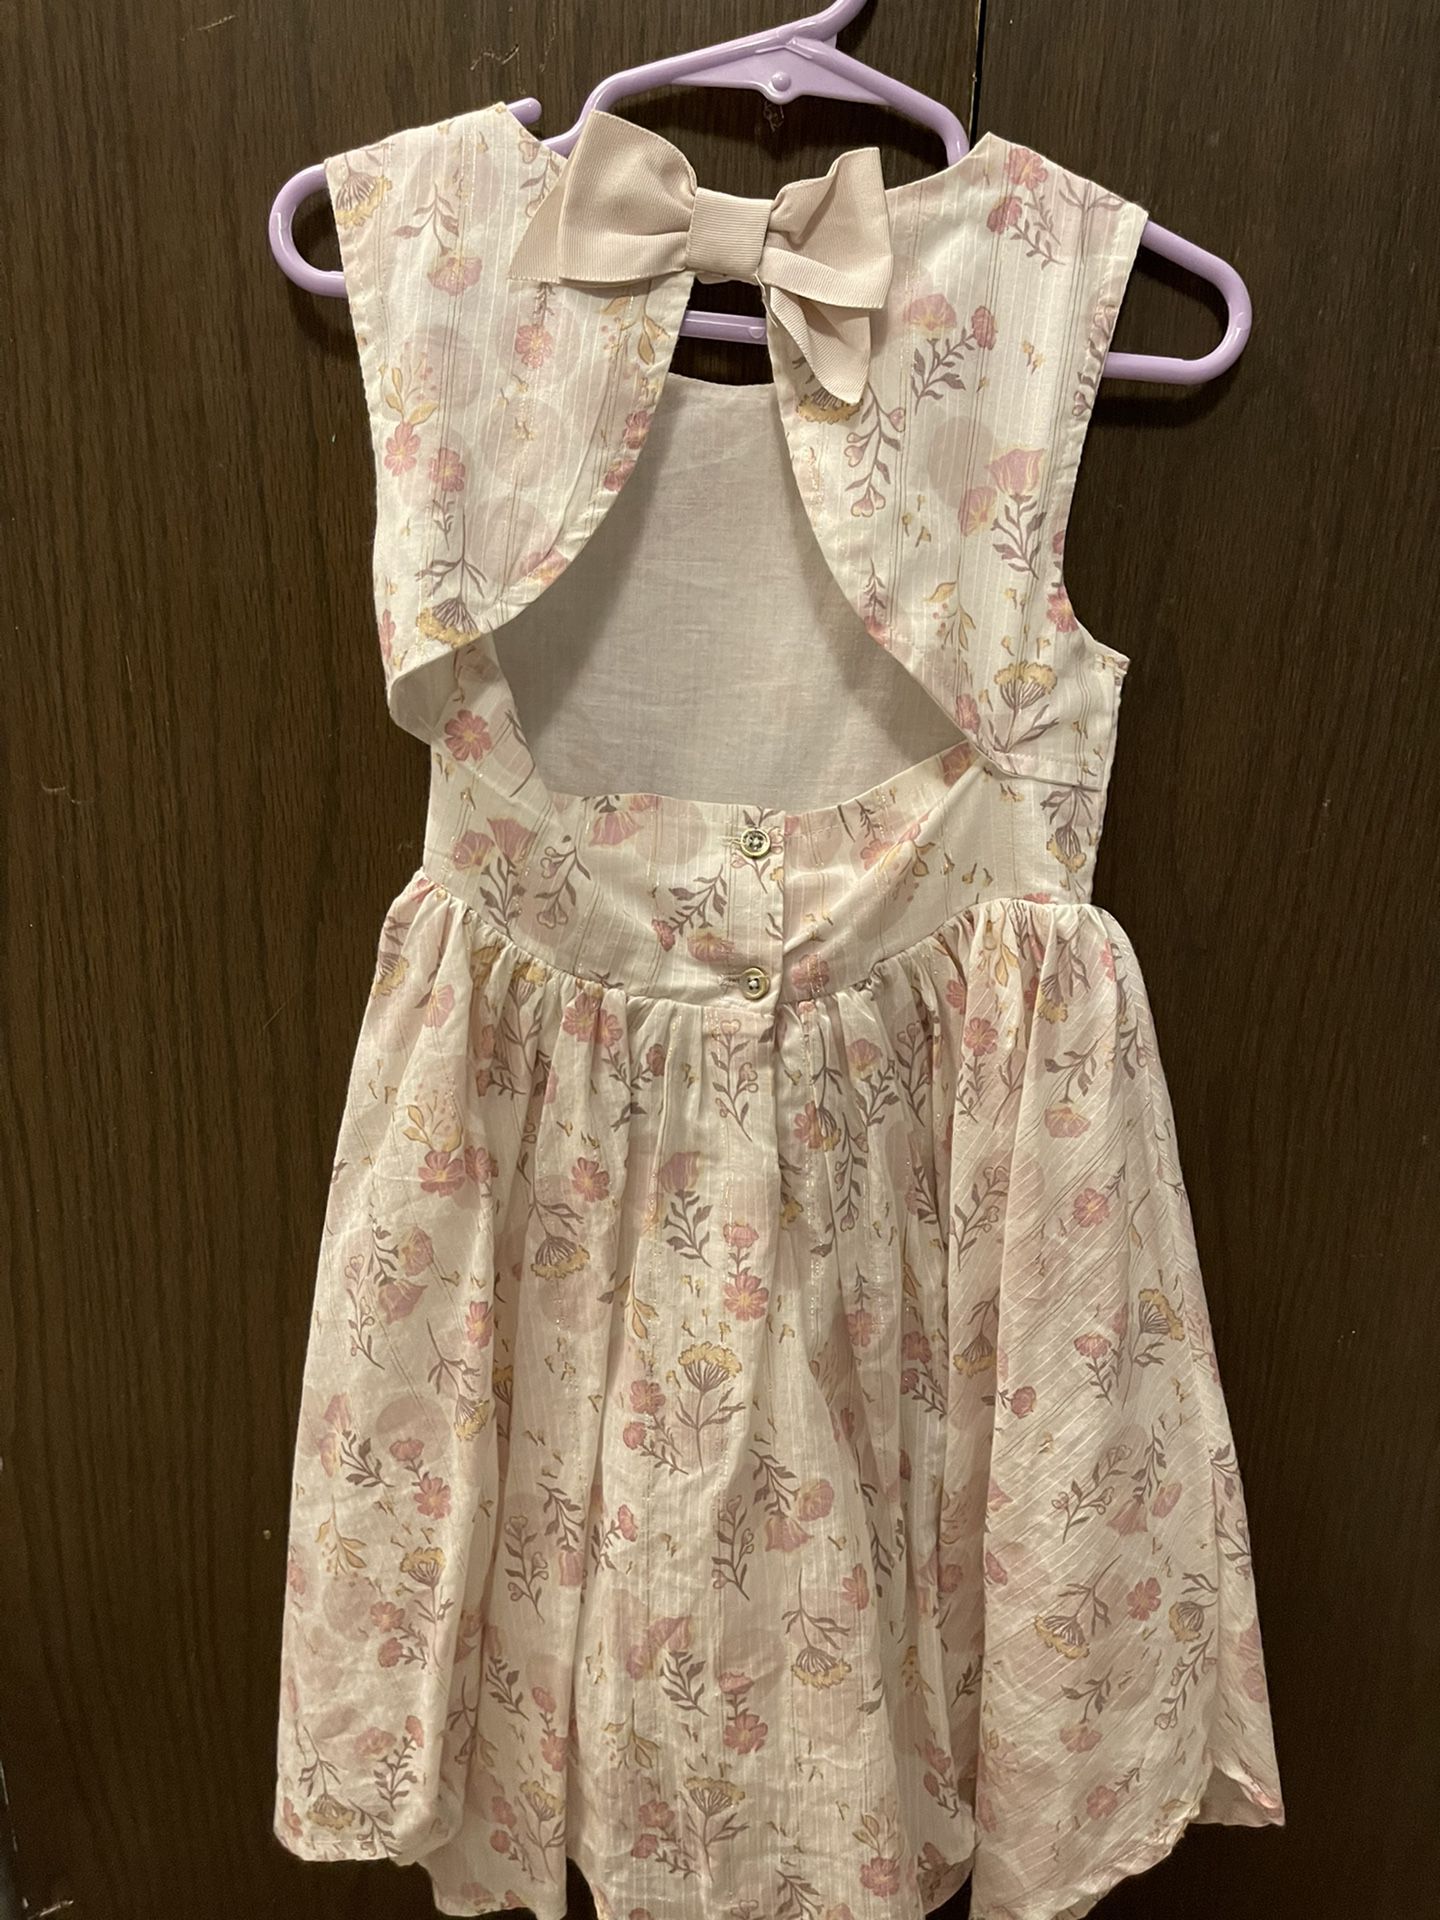 Dress, pink, floral graphics, dress with a back slit